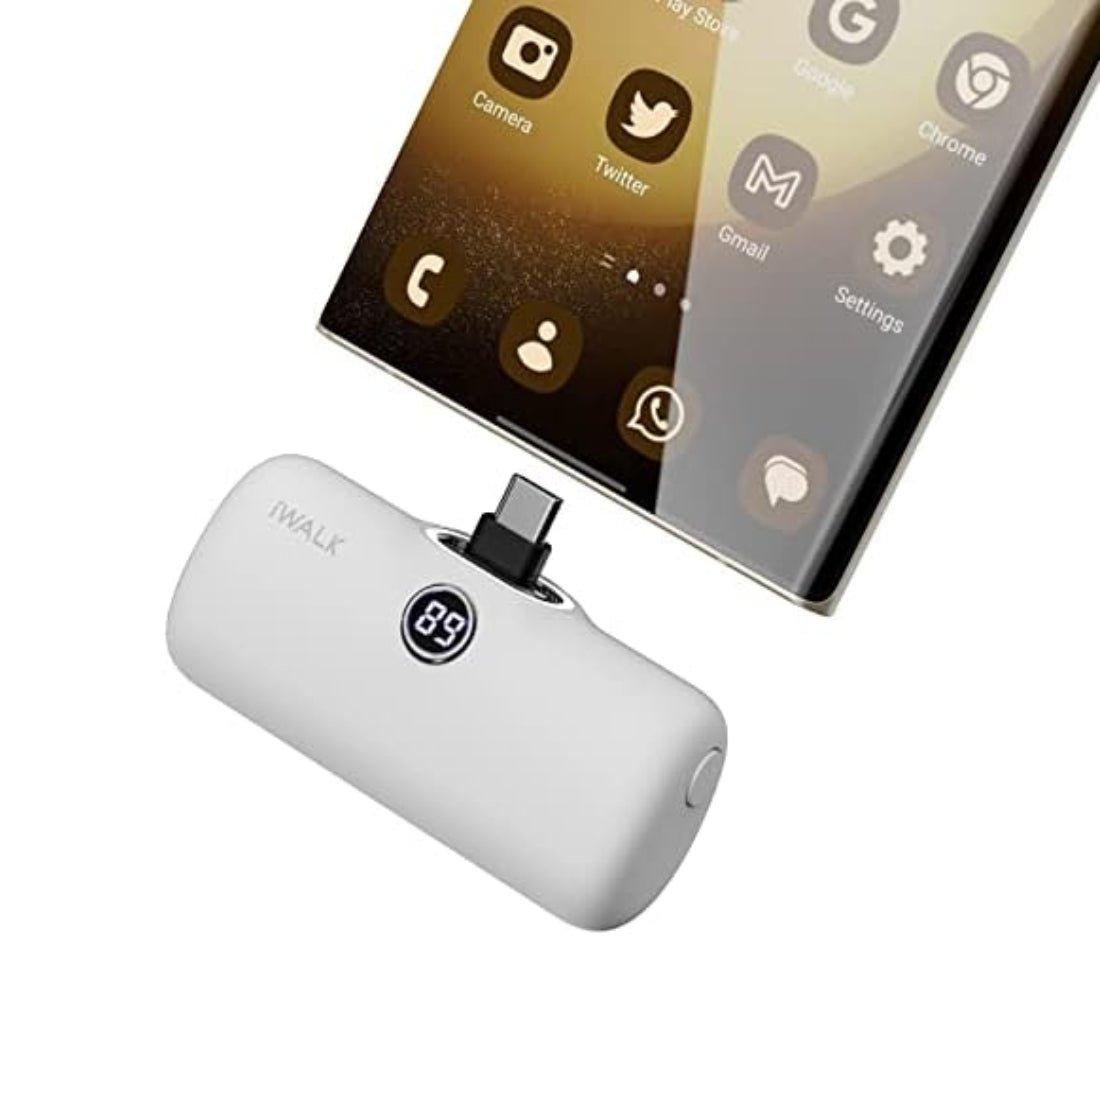 iWALK LinkPod Portable Charger 4800mAh Power Bank - White - مزود طاقة –  Store 974